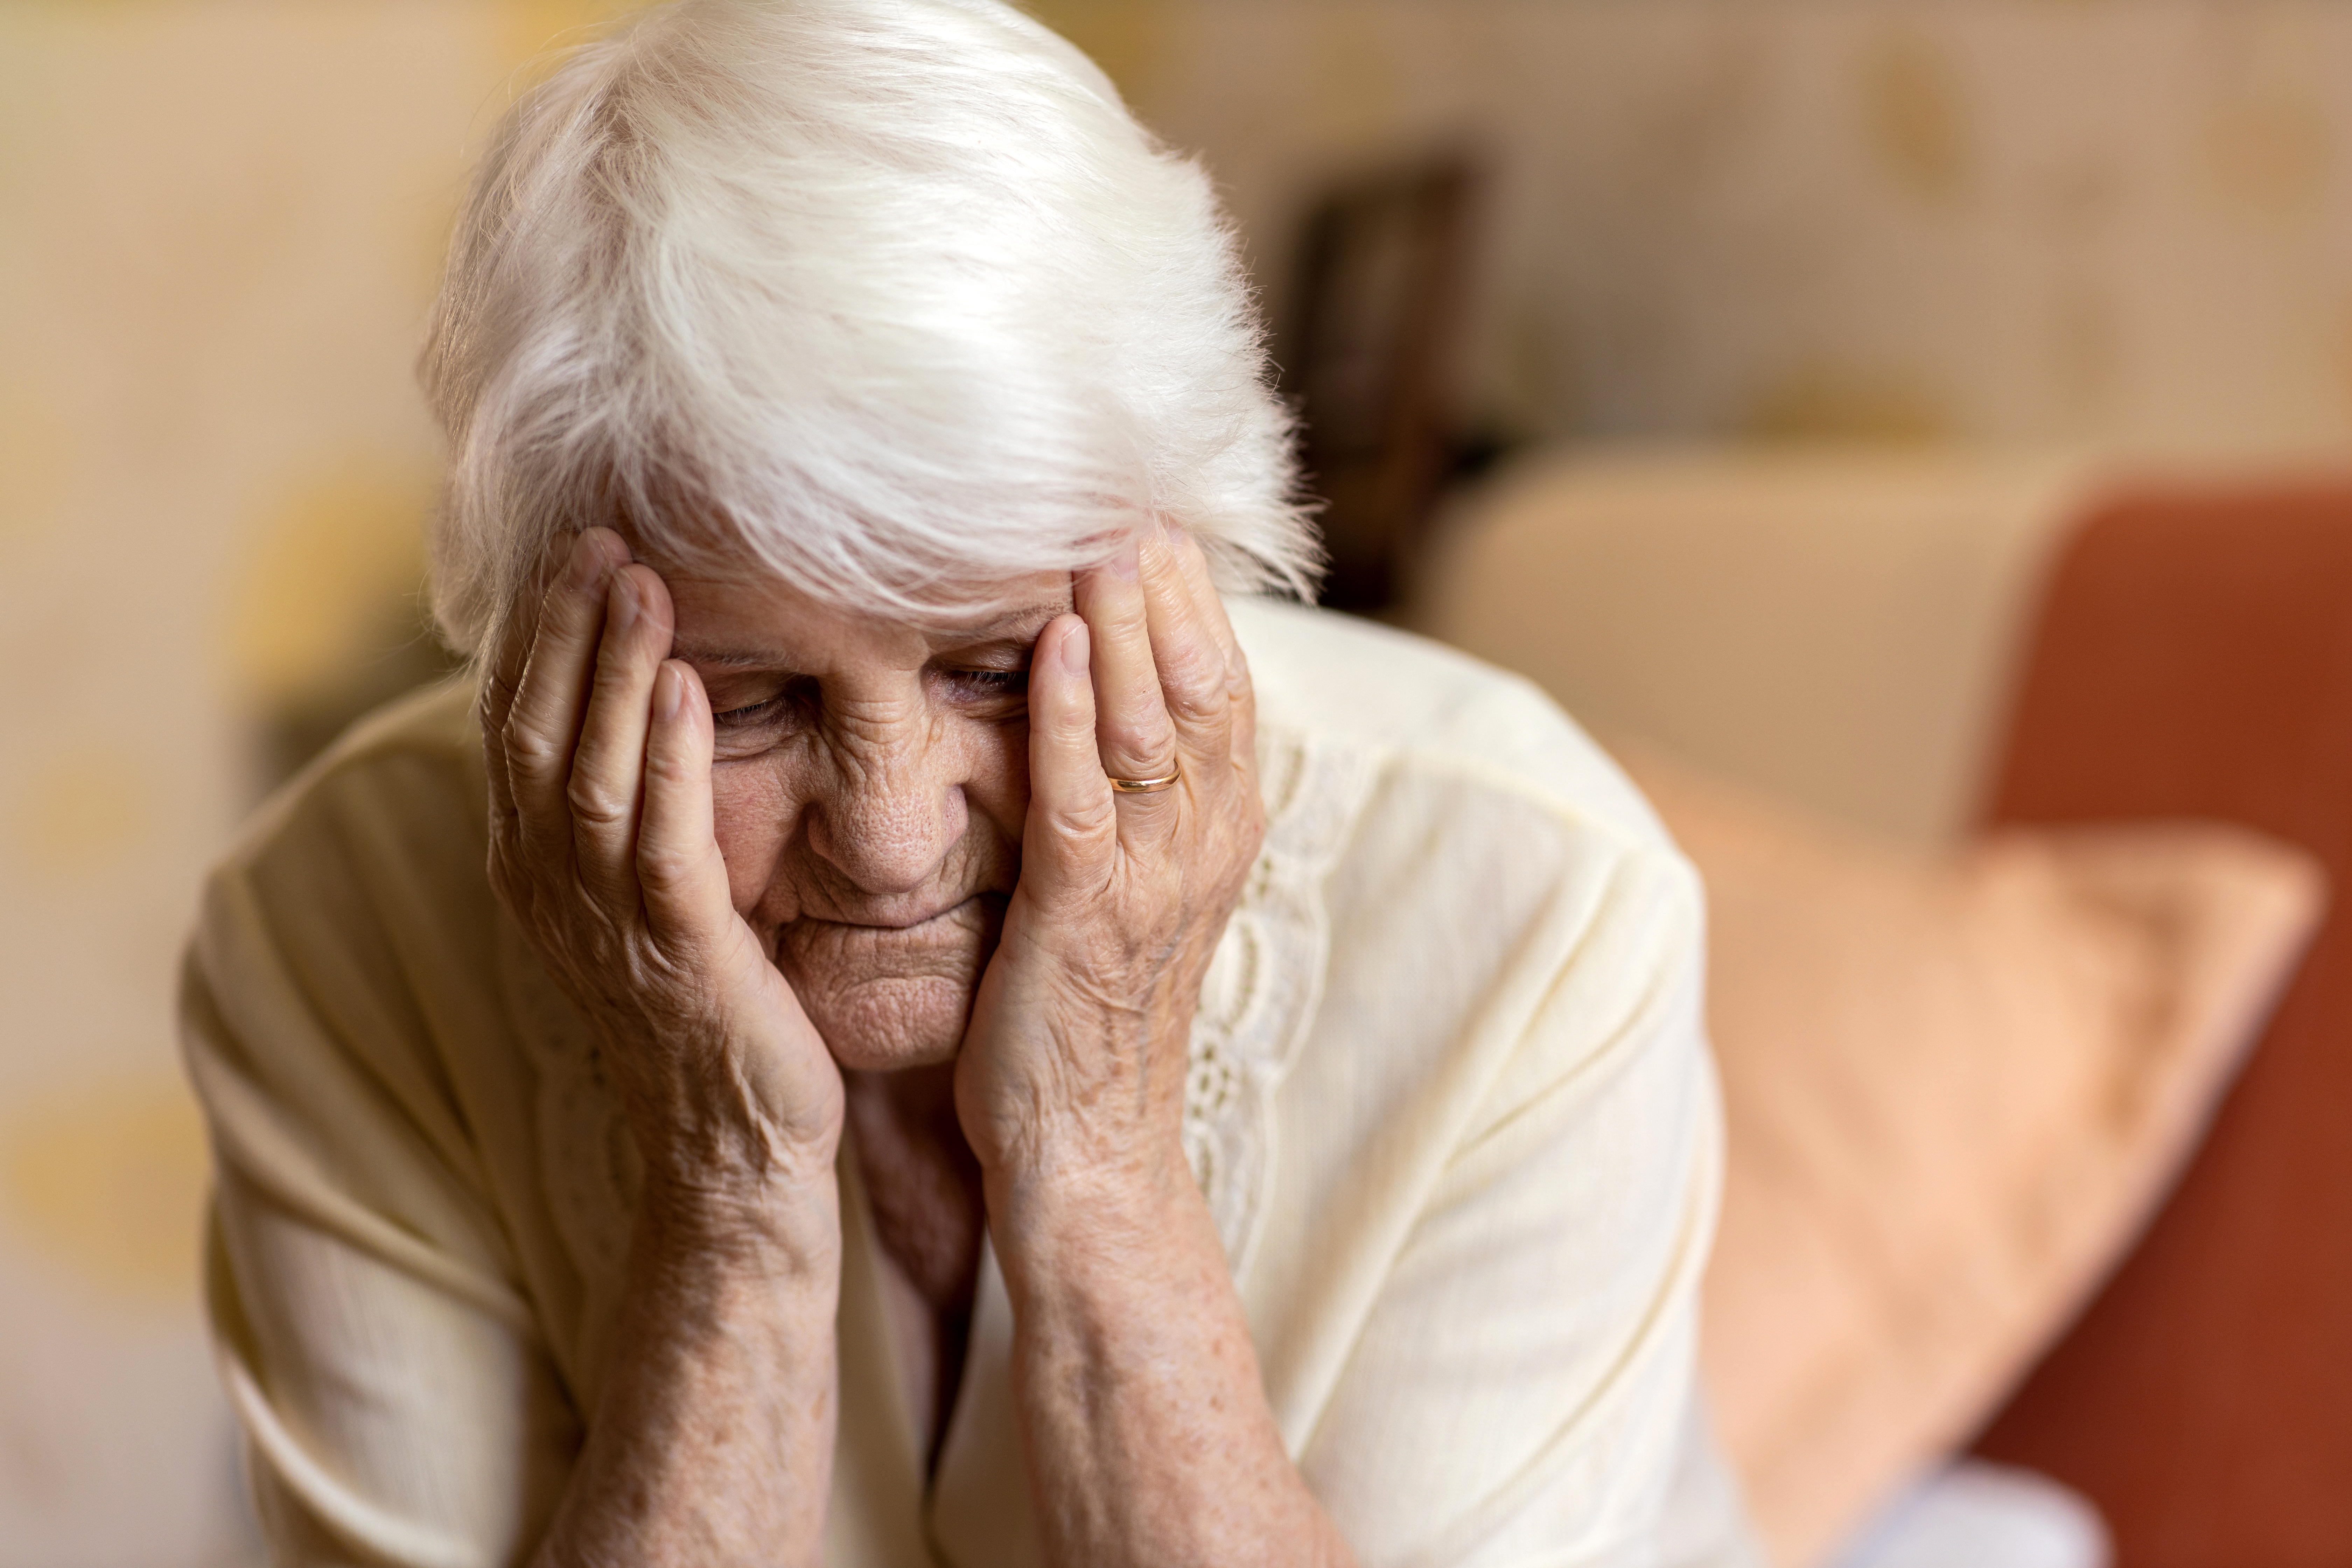 An older woman holding her head in her hands in despair | Source: Shutterstock